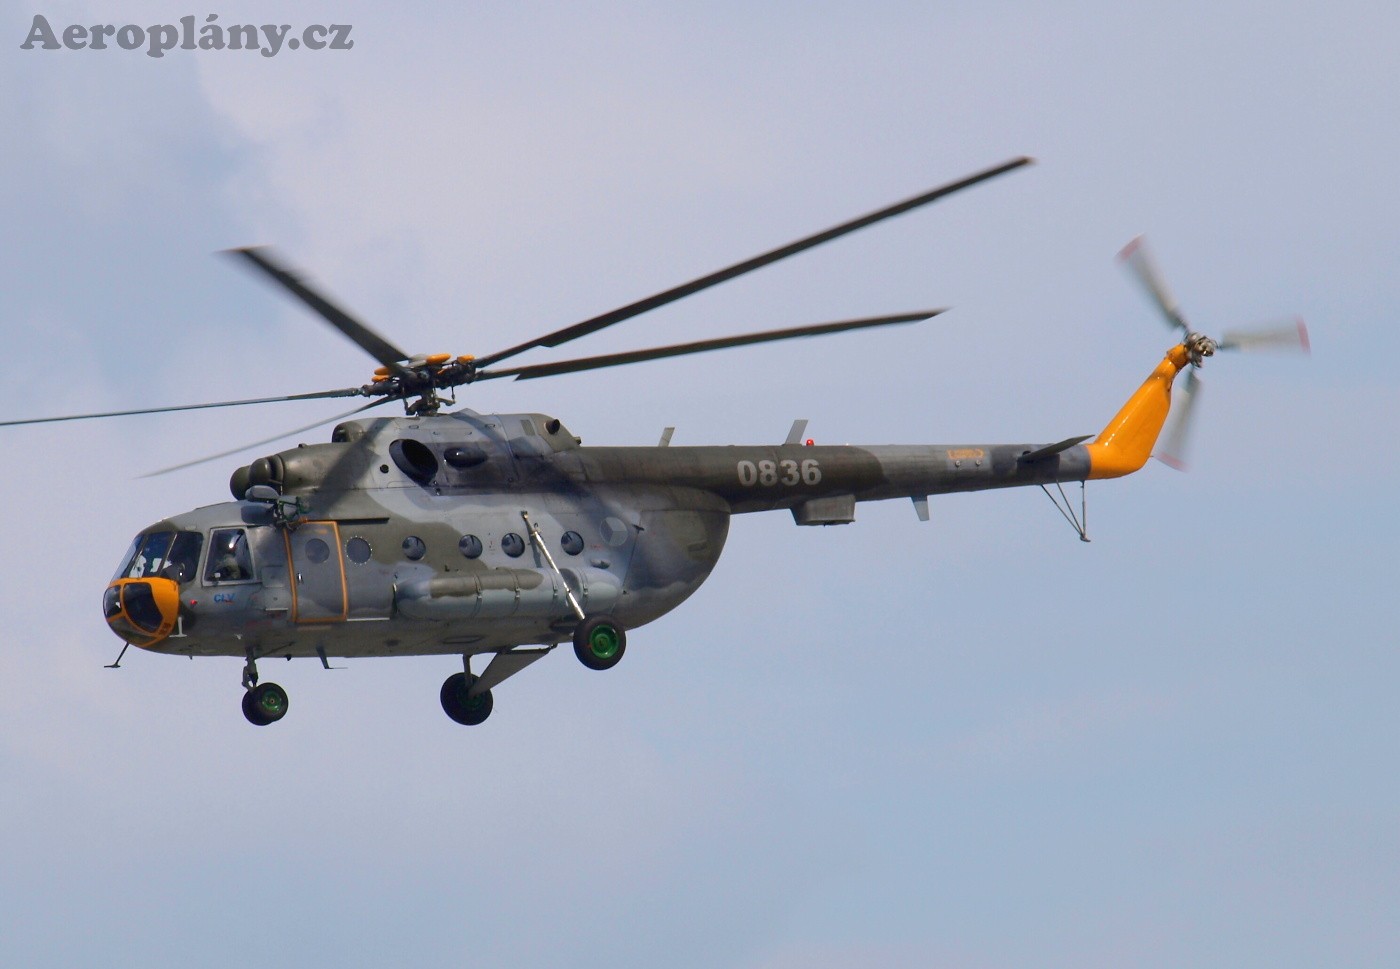 Mil Mi-17 "Hip-H" - 0836